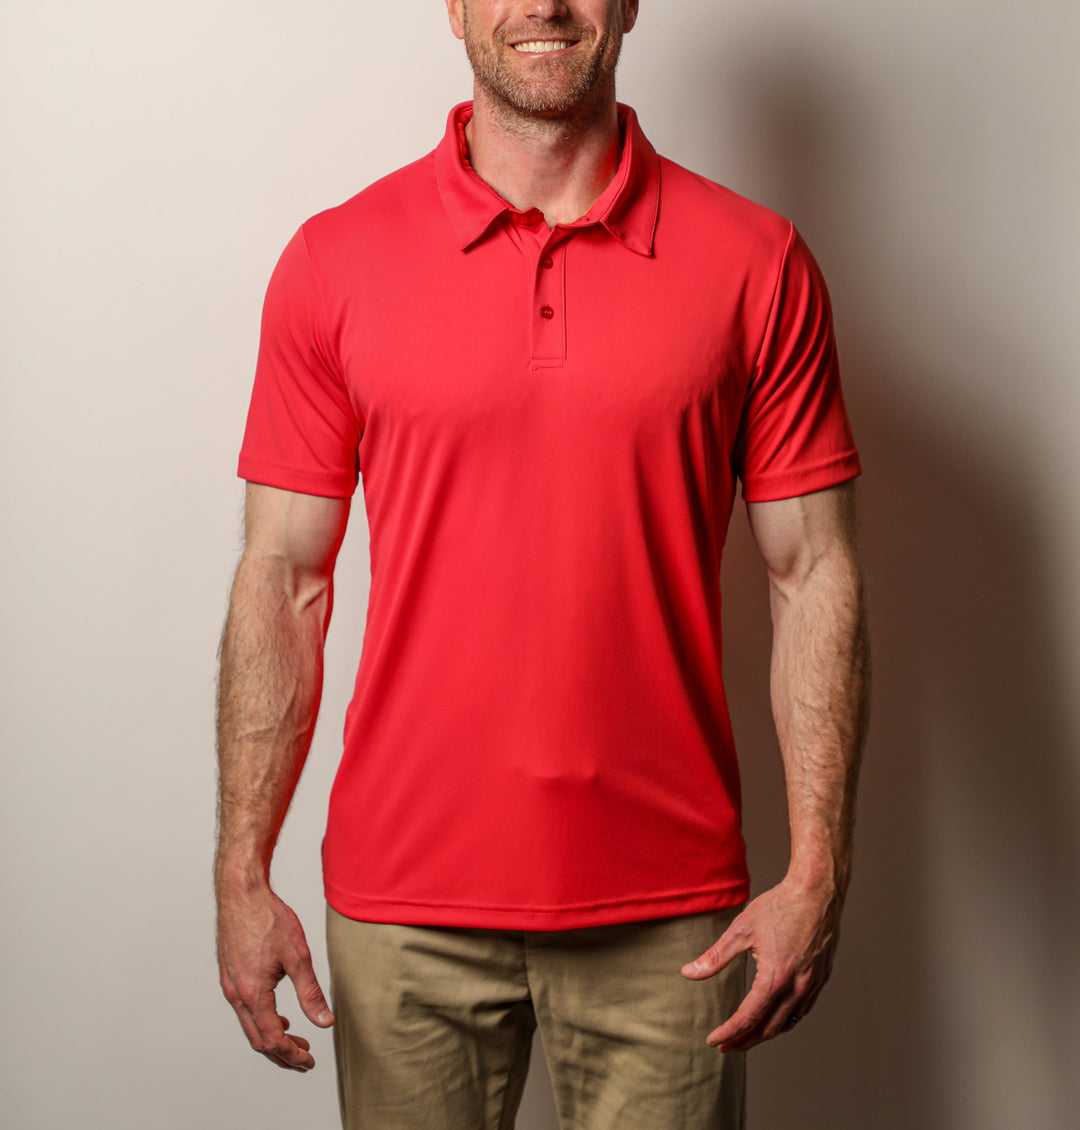 Men's Polyester Sun Protection Golf Shirt, UPF 50+ - Rayward Apparel